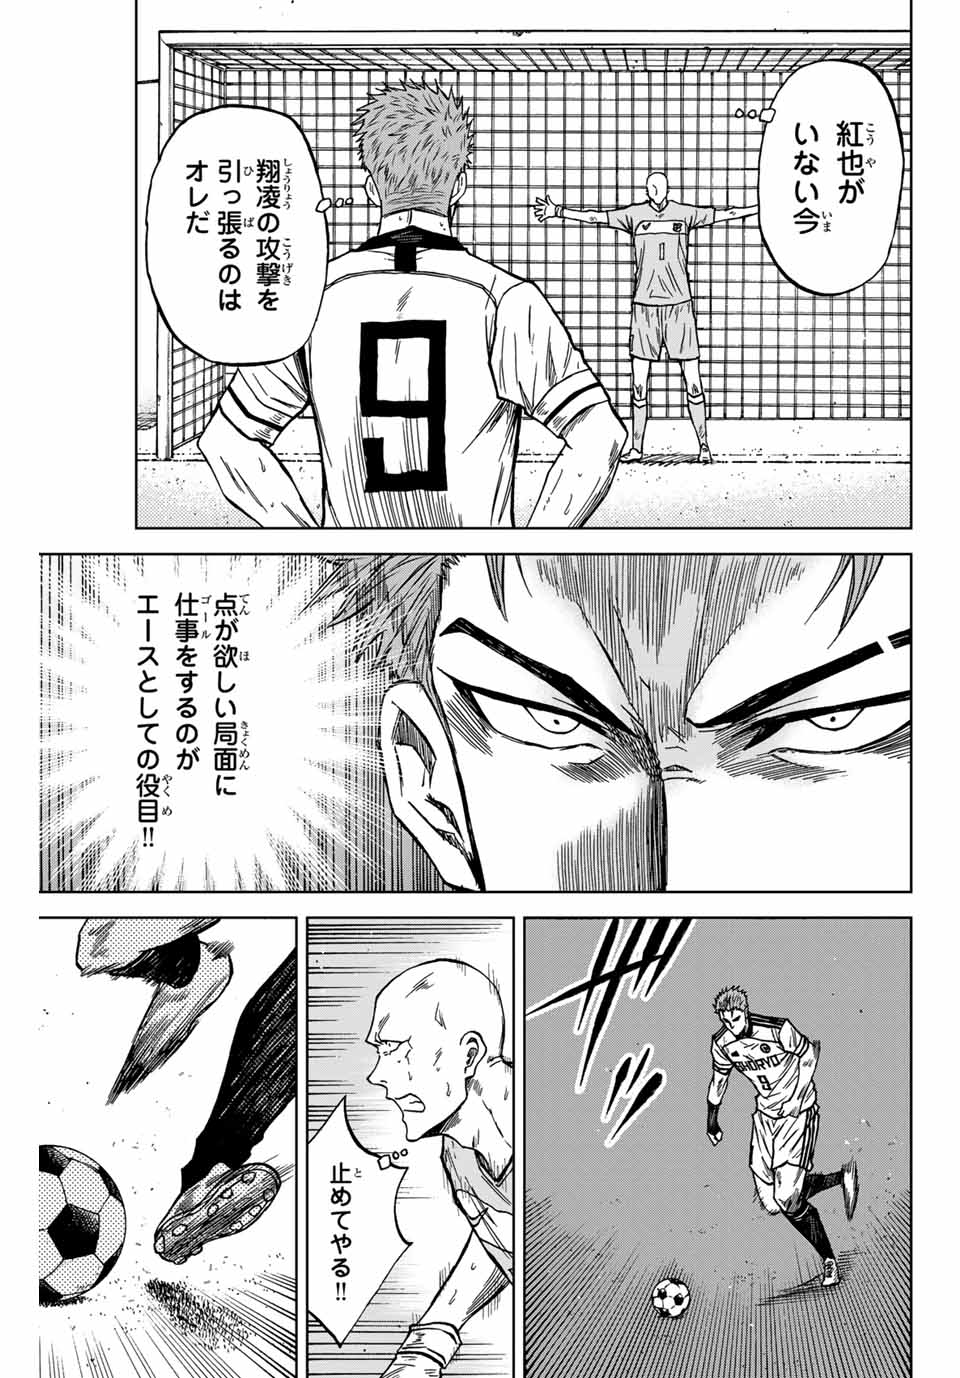 Aoku Somero - Chapter 121 - Page 3